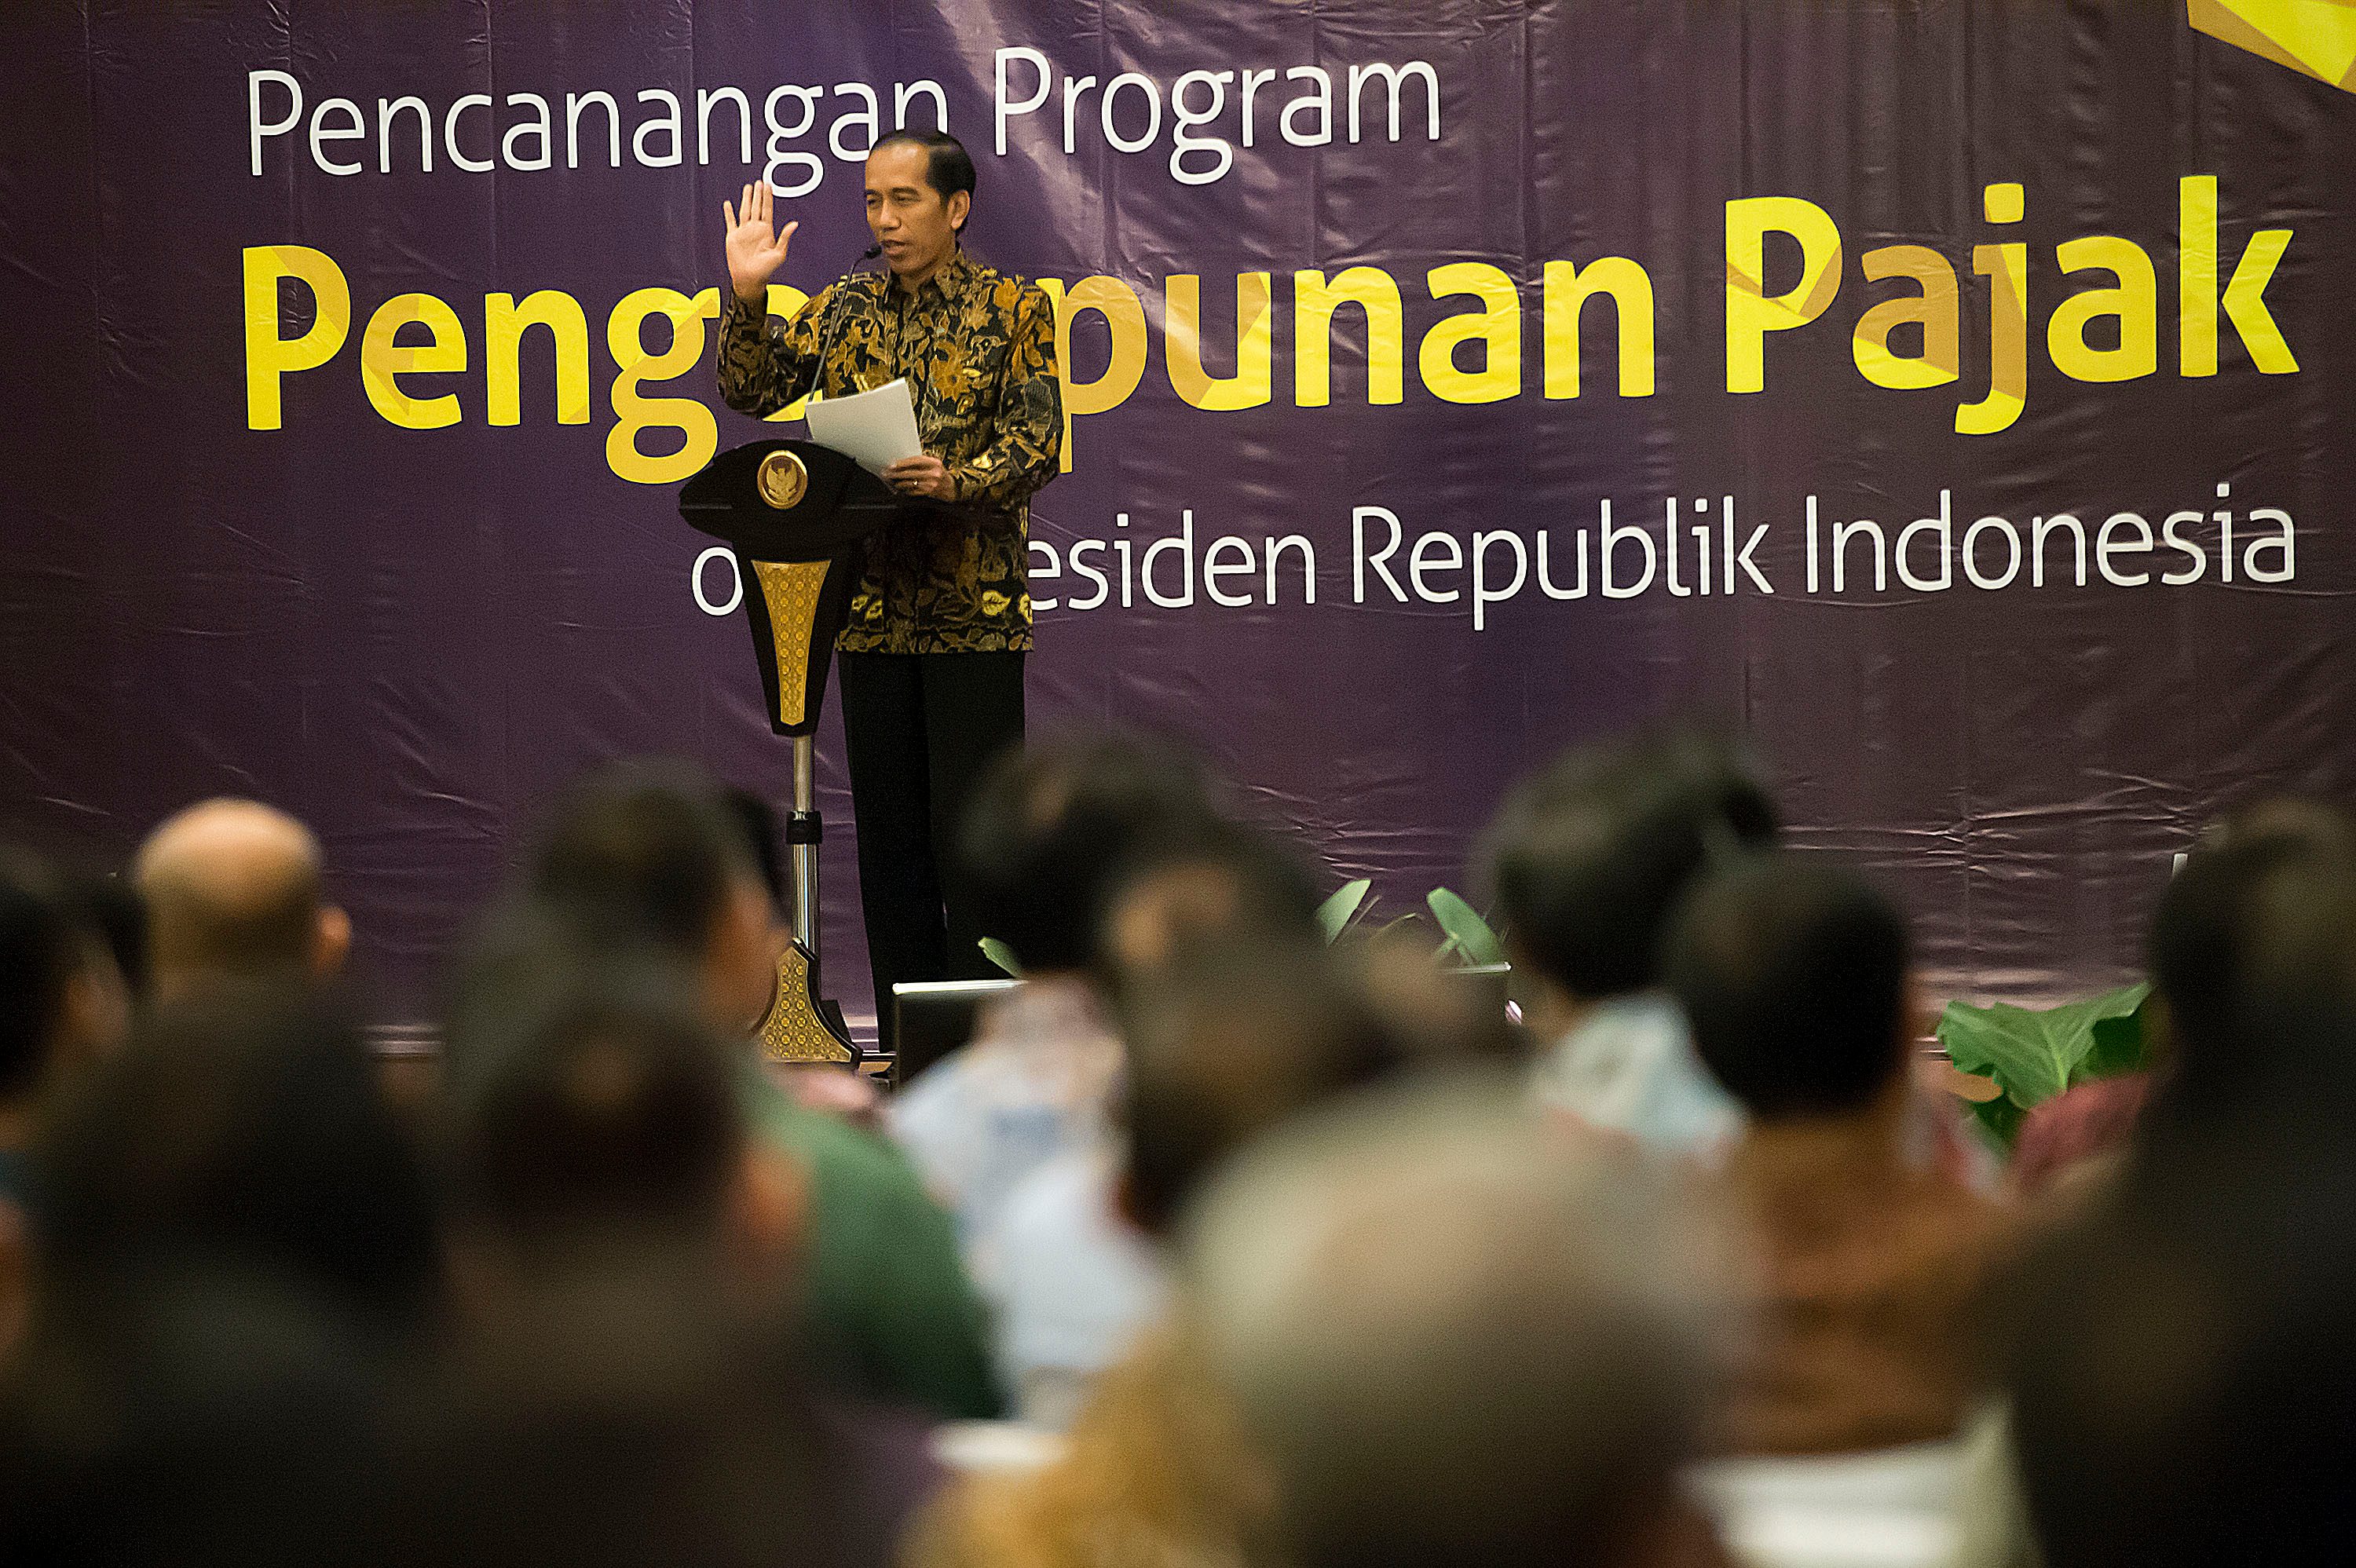 Presiden Jokowi menyampaikan sambutannya dalam acara Pencanangan Program Pengampunan Pajak (Tax Amnesty) di Kantor Pusat Ditjen Pajak, Jakarta, pada 1 Juli 2016. Foto oleh Widodo S. Jusuf/Antara 